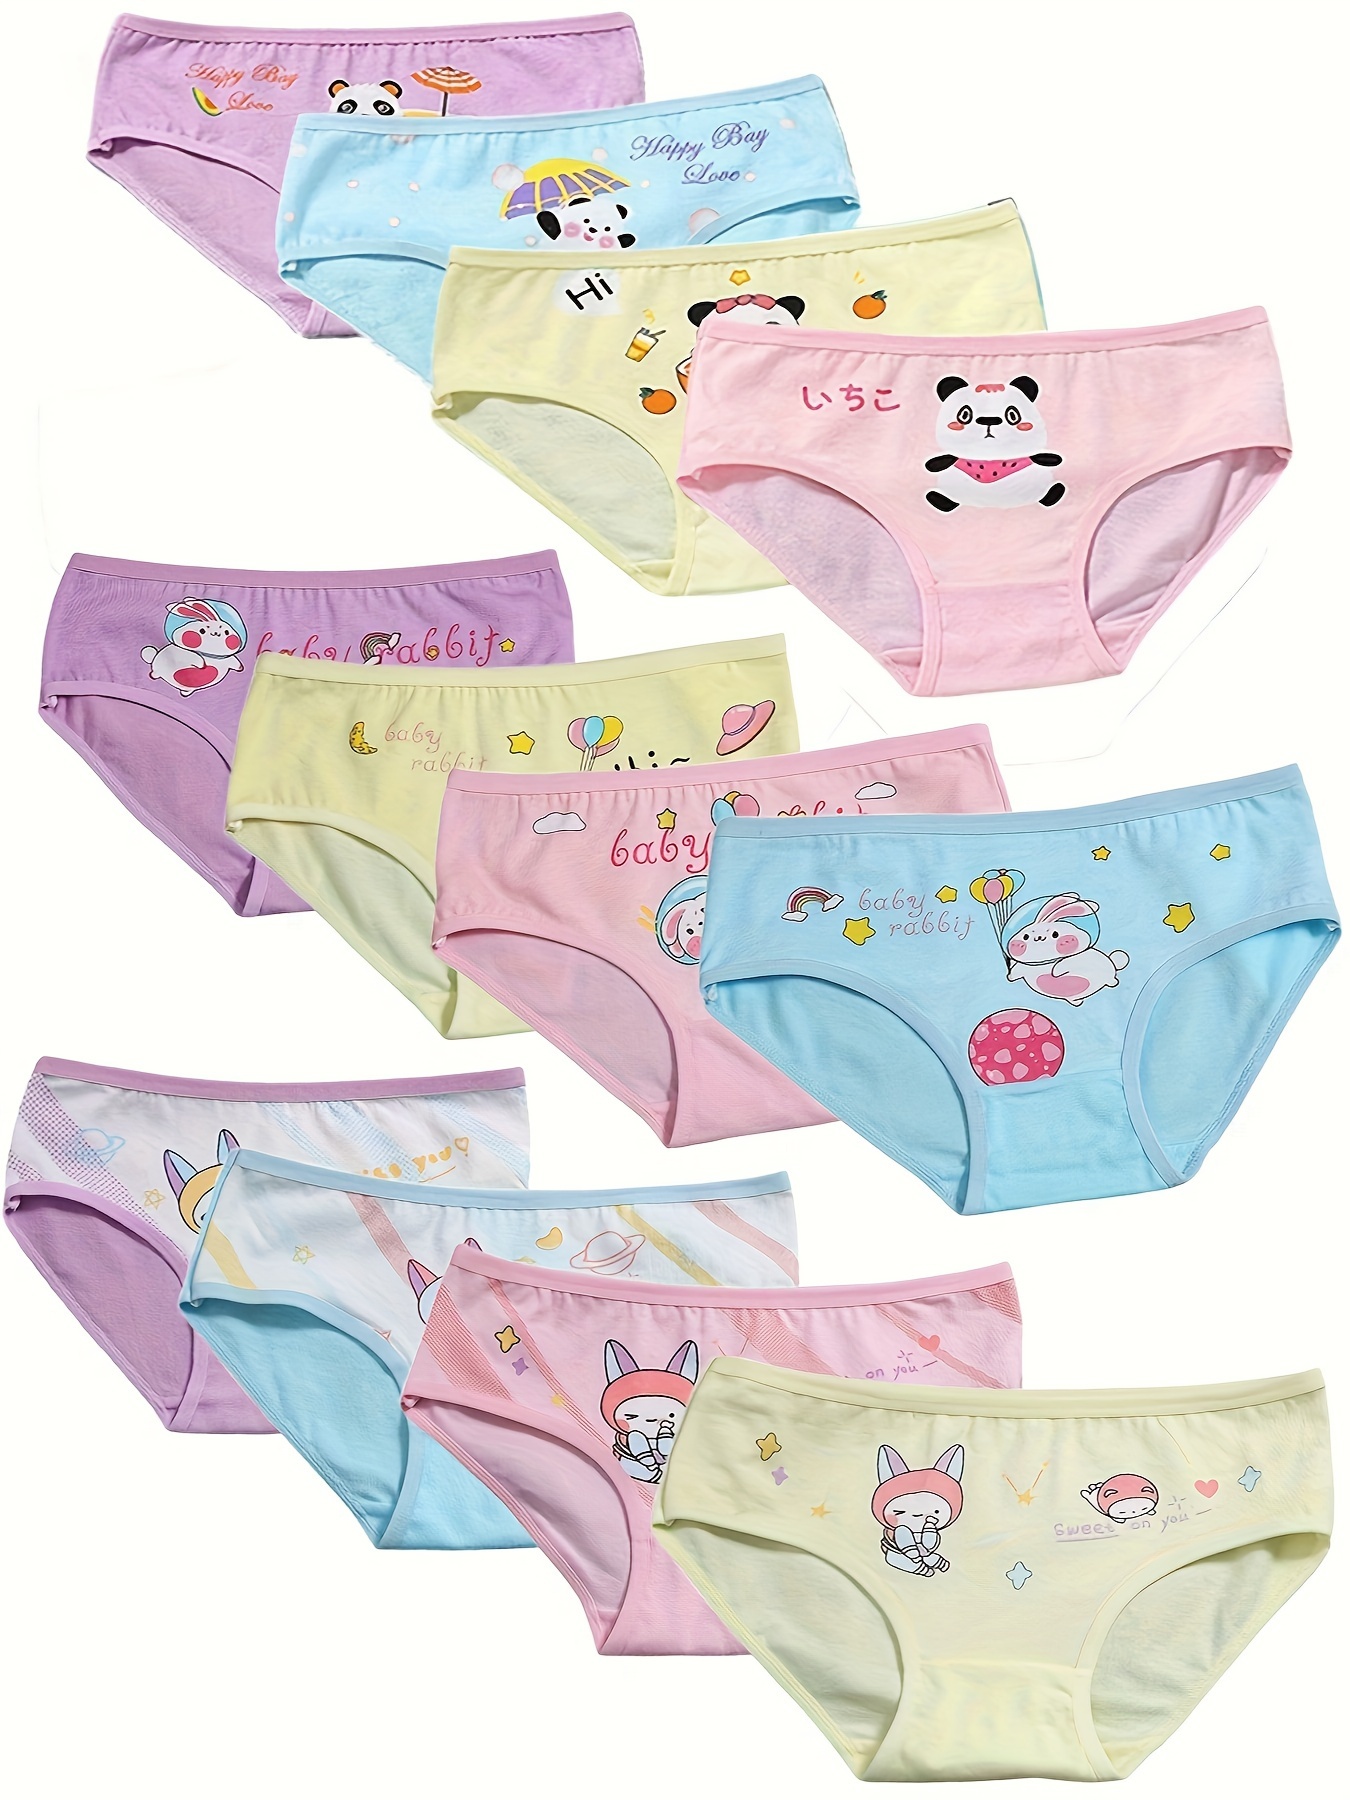 12pcs Girls underwear hello Kitty panty girl panty